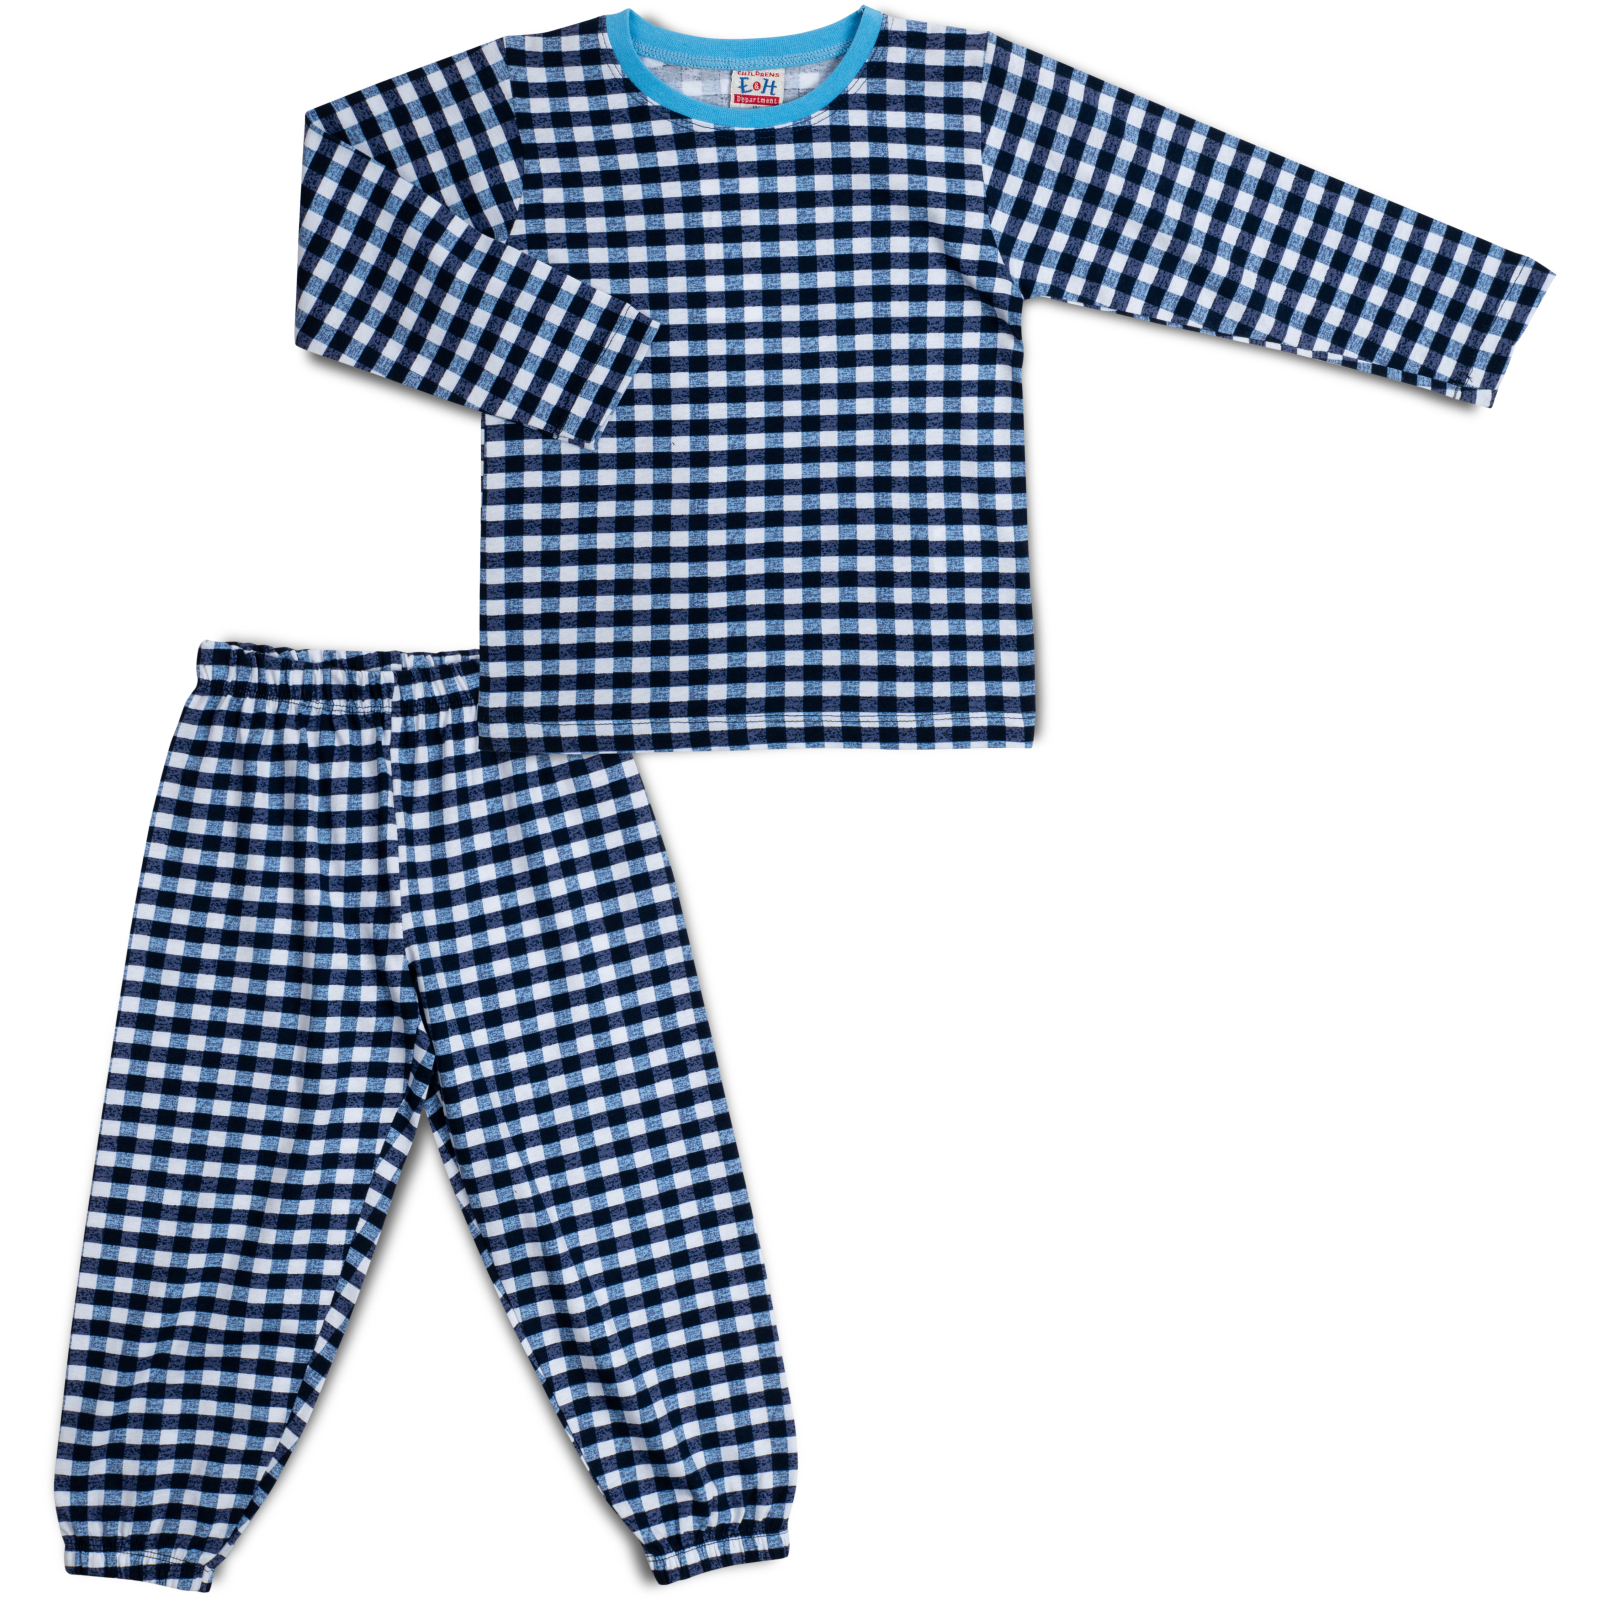 Пижама Breeze трикотажная (16030-128-blue)